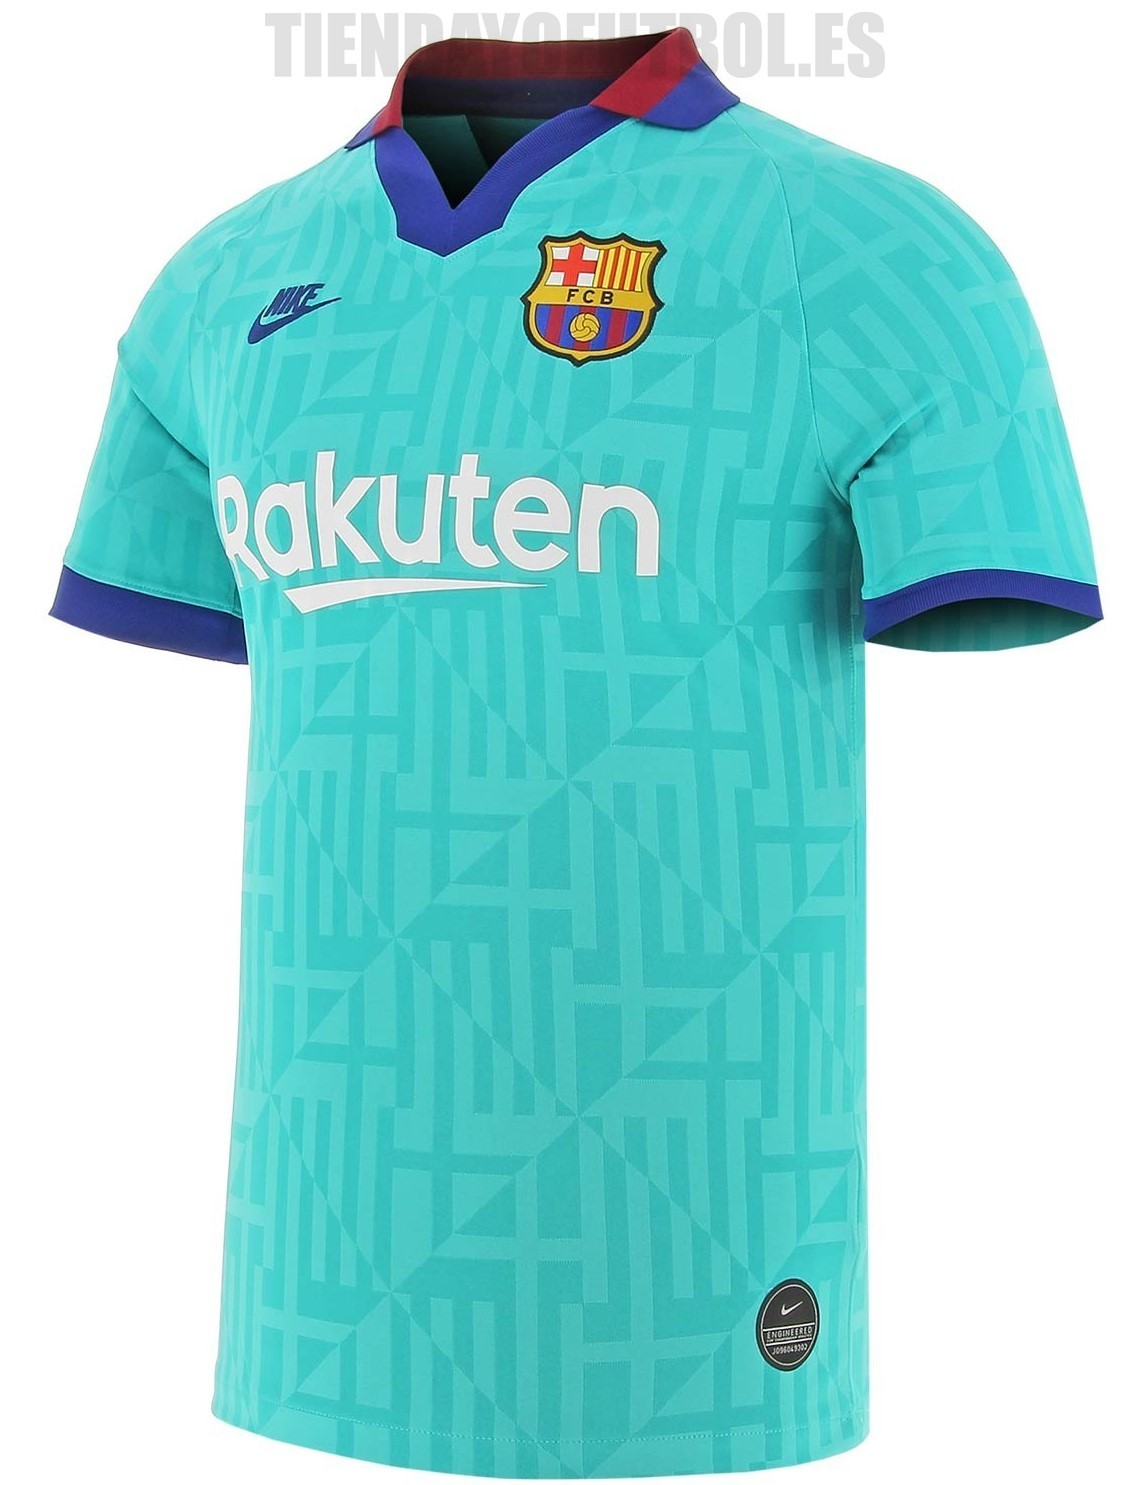 Vulgaridad Agua con gas Inocencia Barcelona FC camiseta 2019/20 oficial | camiseta juego oficial Barça Nike